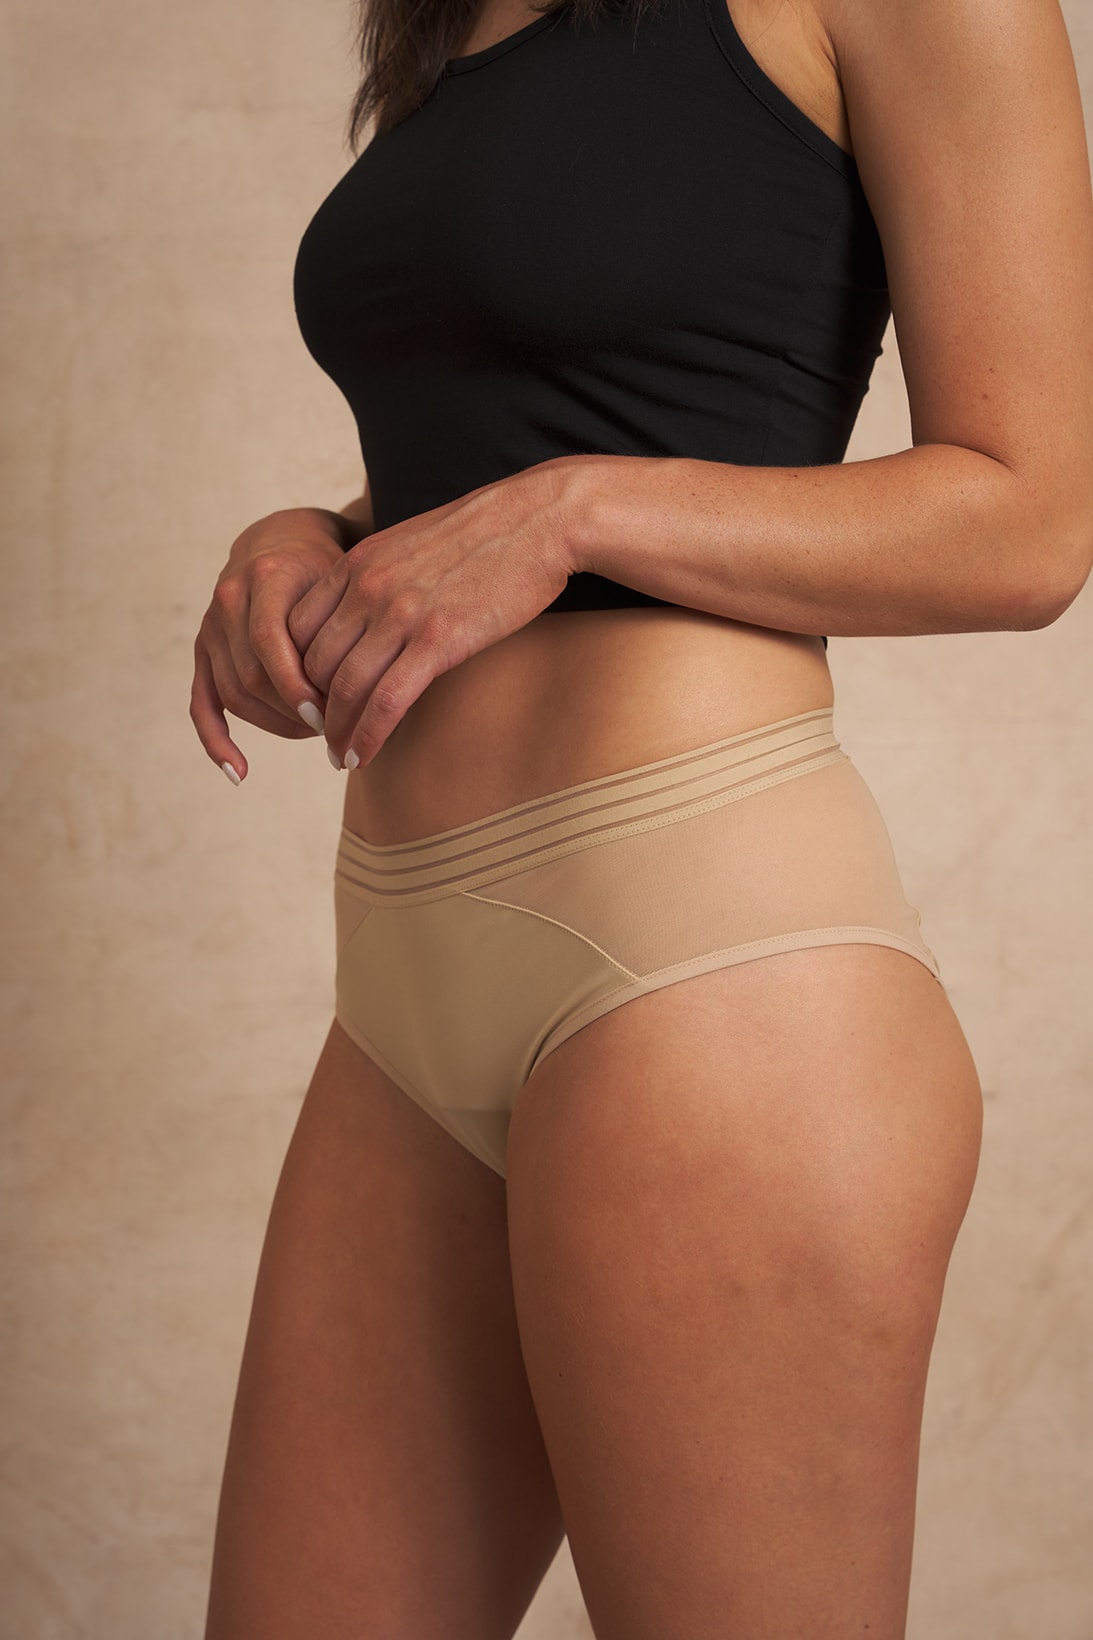 saalt period menstruation underwear collection leakproof sustainable